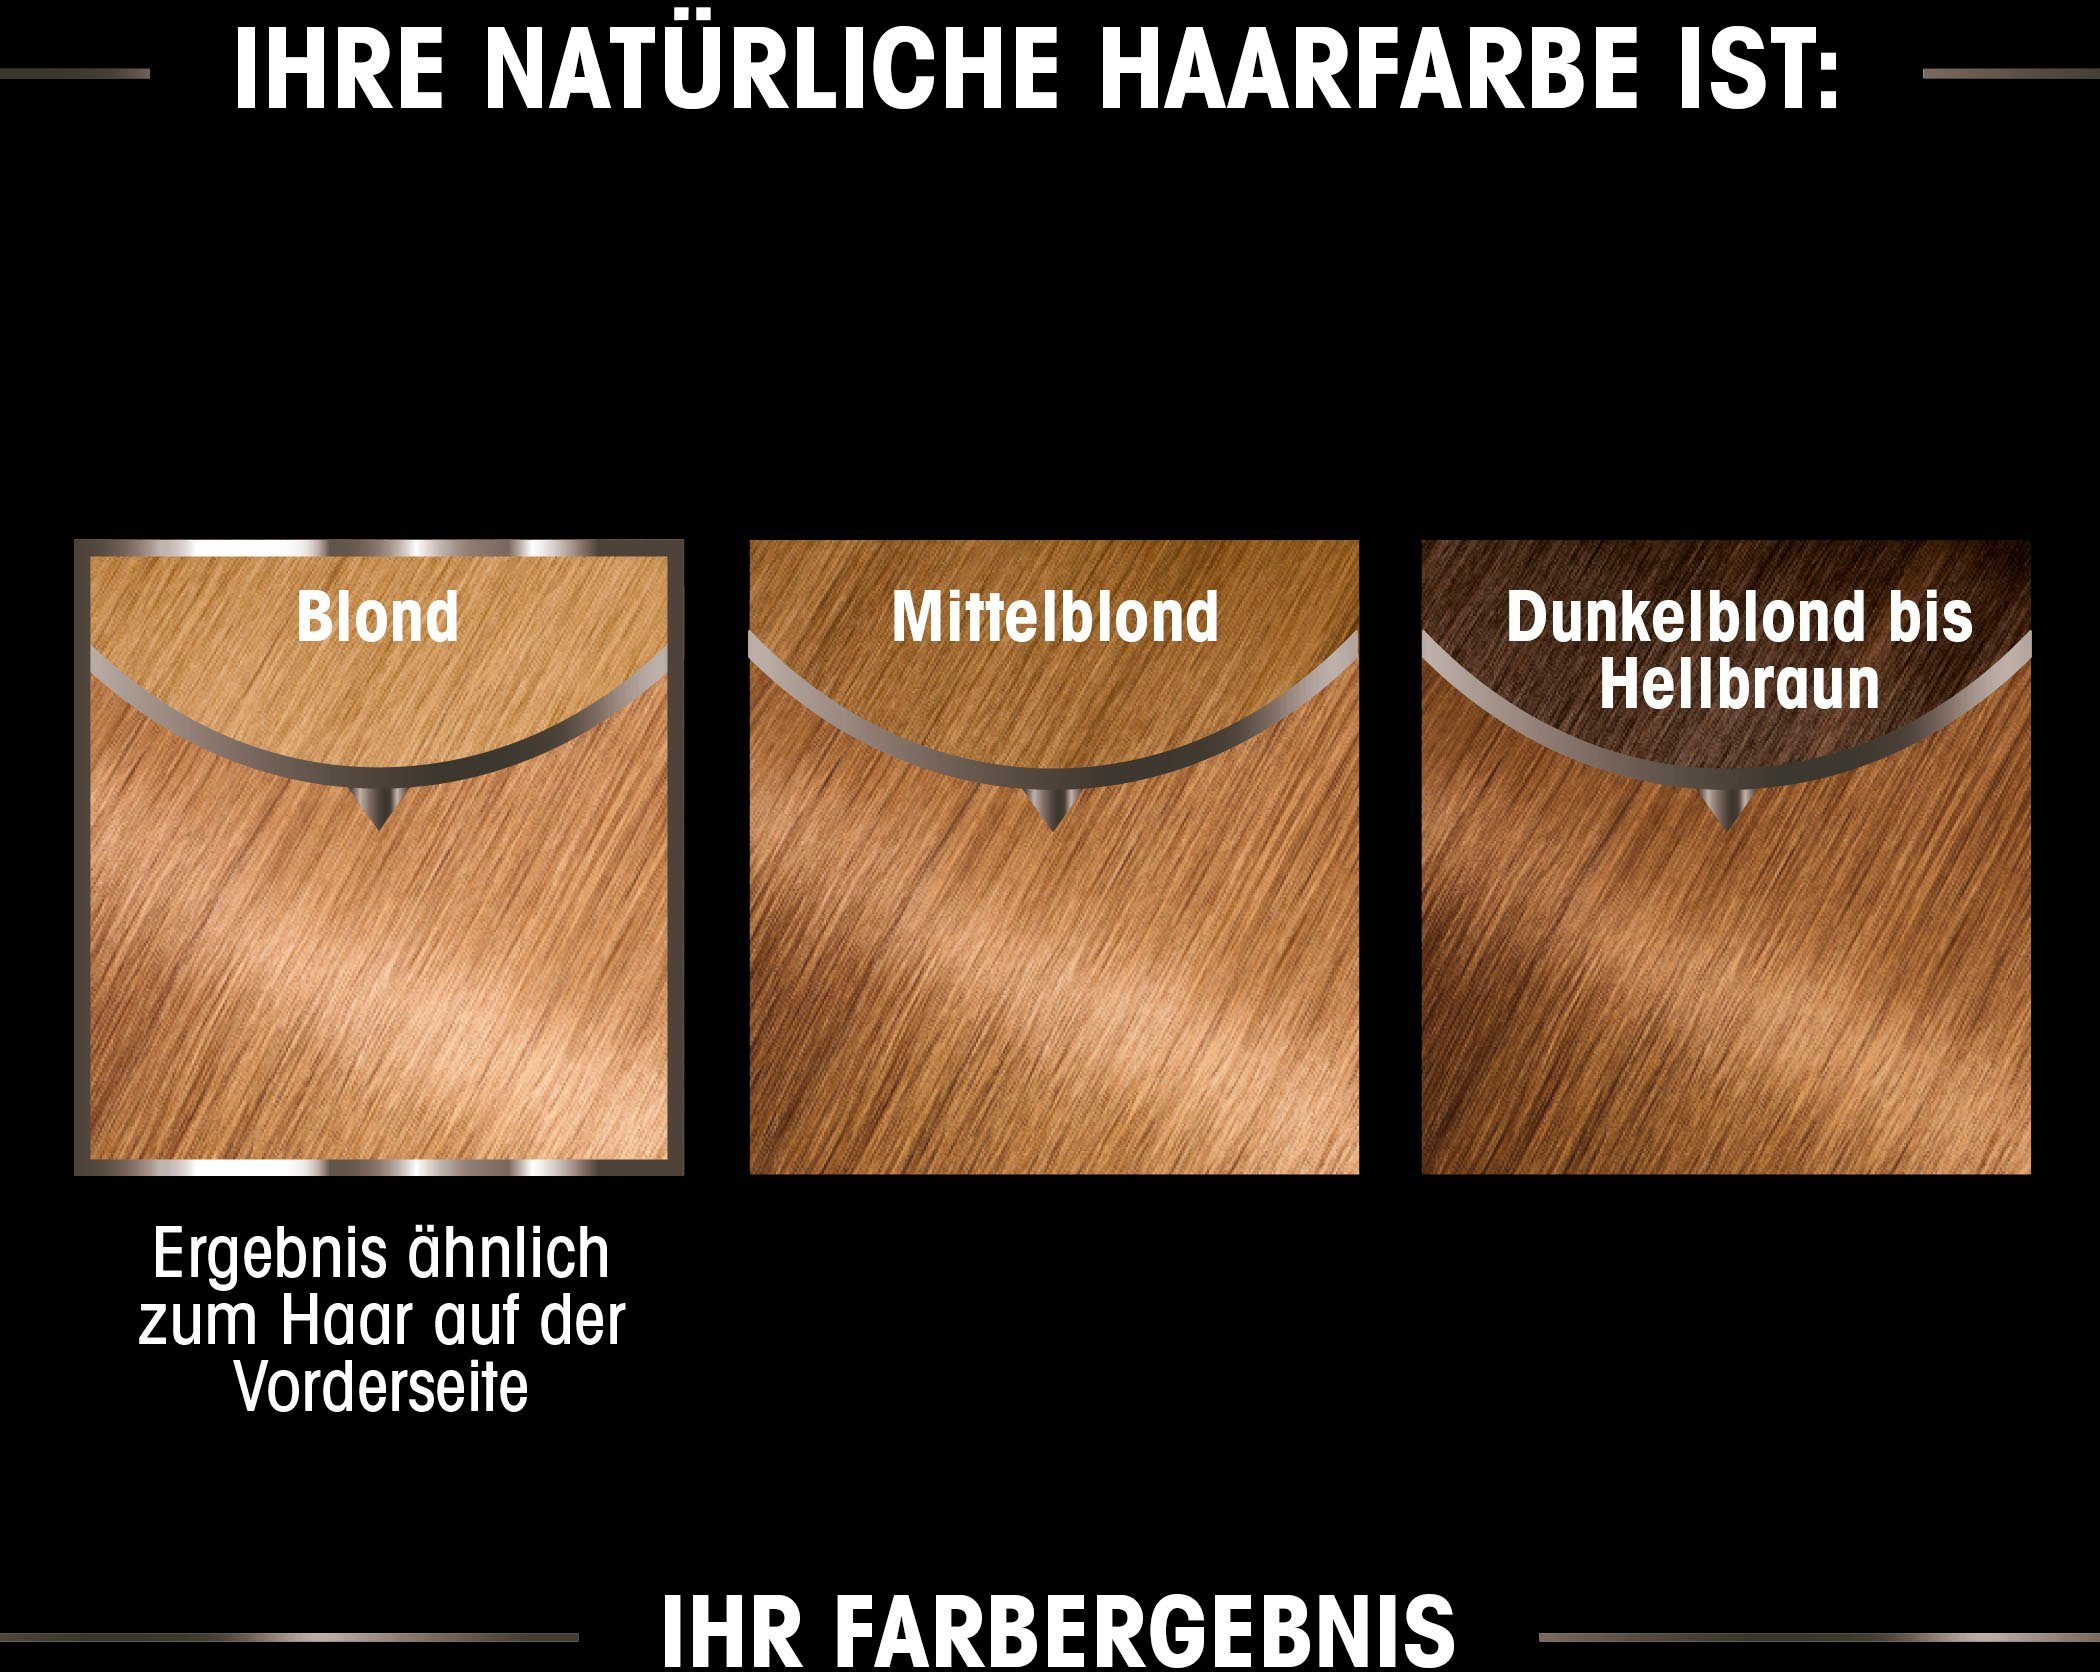 Haarfarbe, Set, 3-tlg., Coloration 8.31 dauerhafte Garnier GARNIER Honigblond Olia